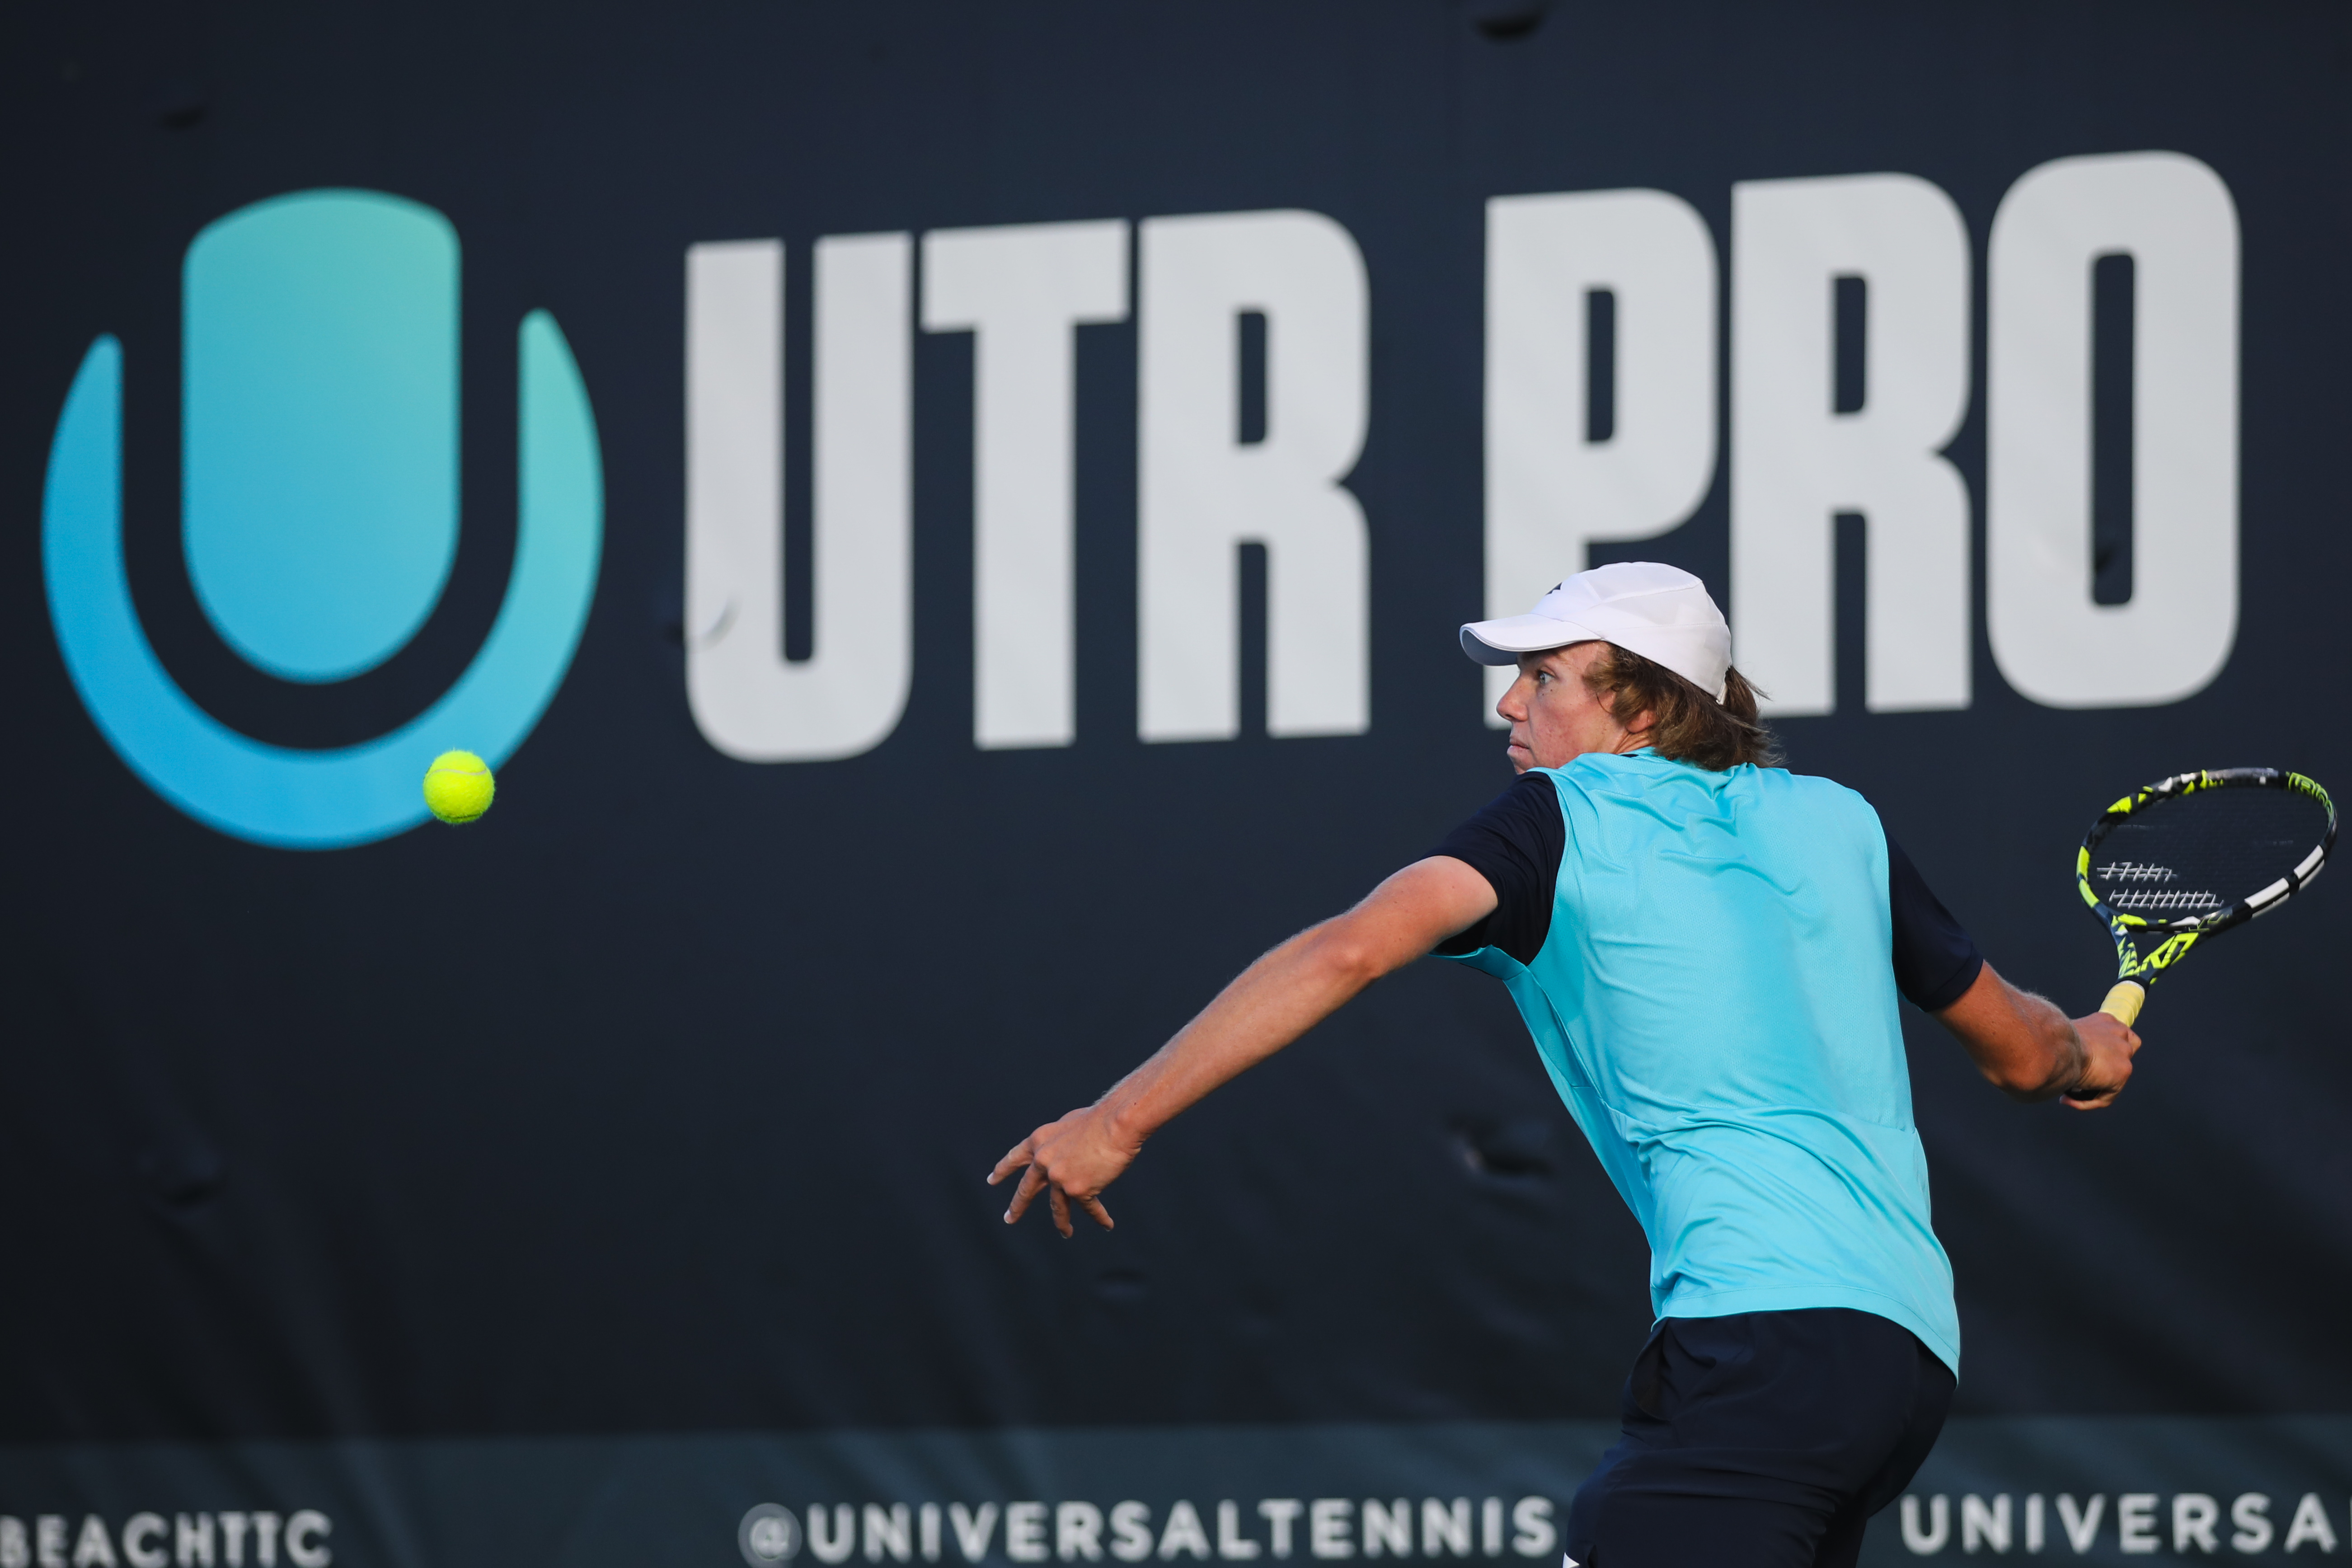 Universal Tennis UTR Pro Tennis Tour Launches on Prime